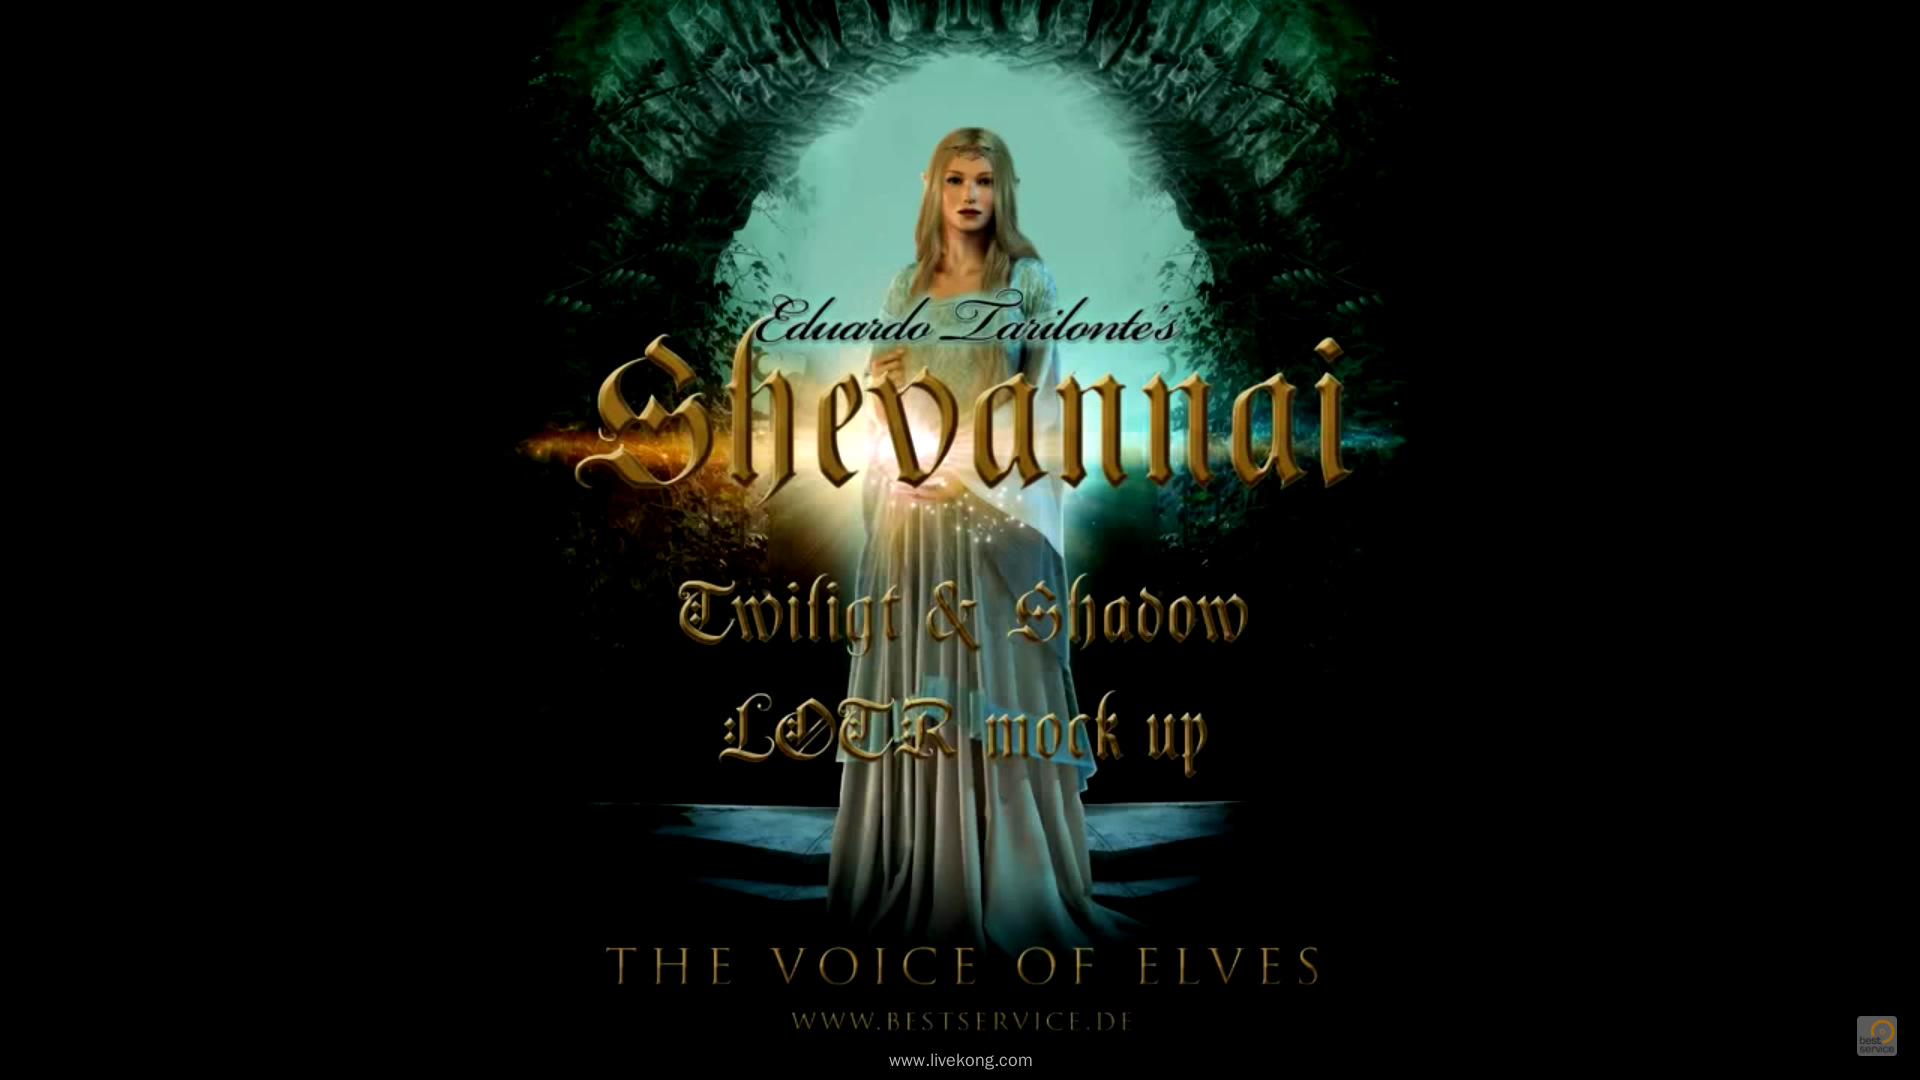 Best Service Shevannai the Voices of Elves 空灵女声独唱音源